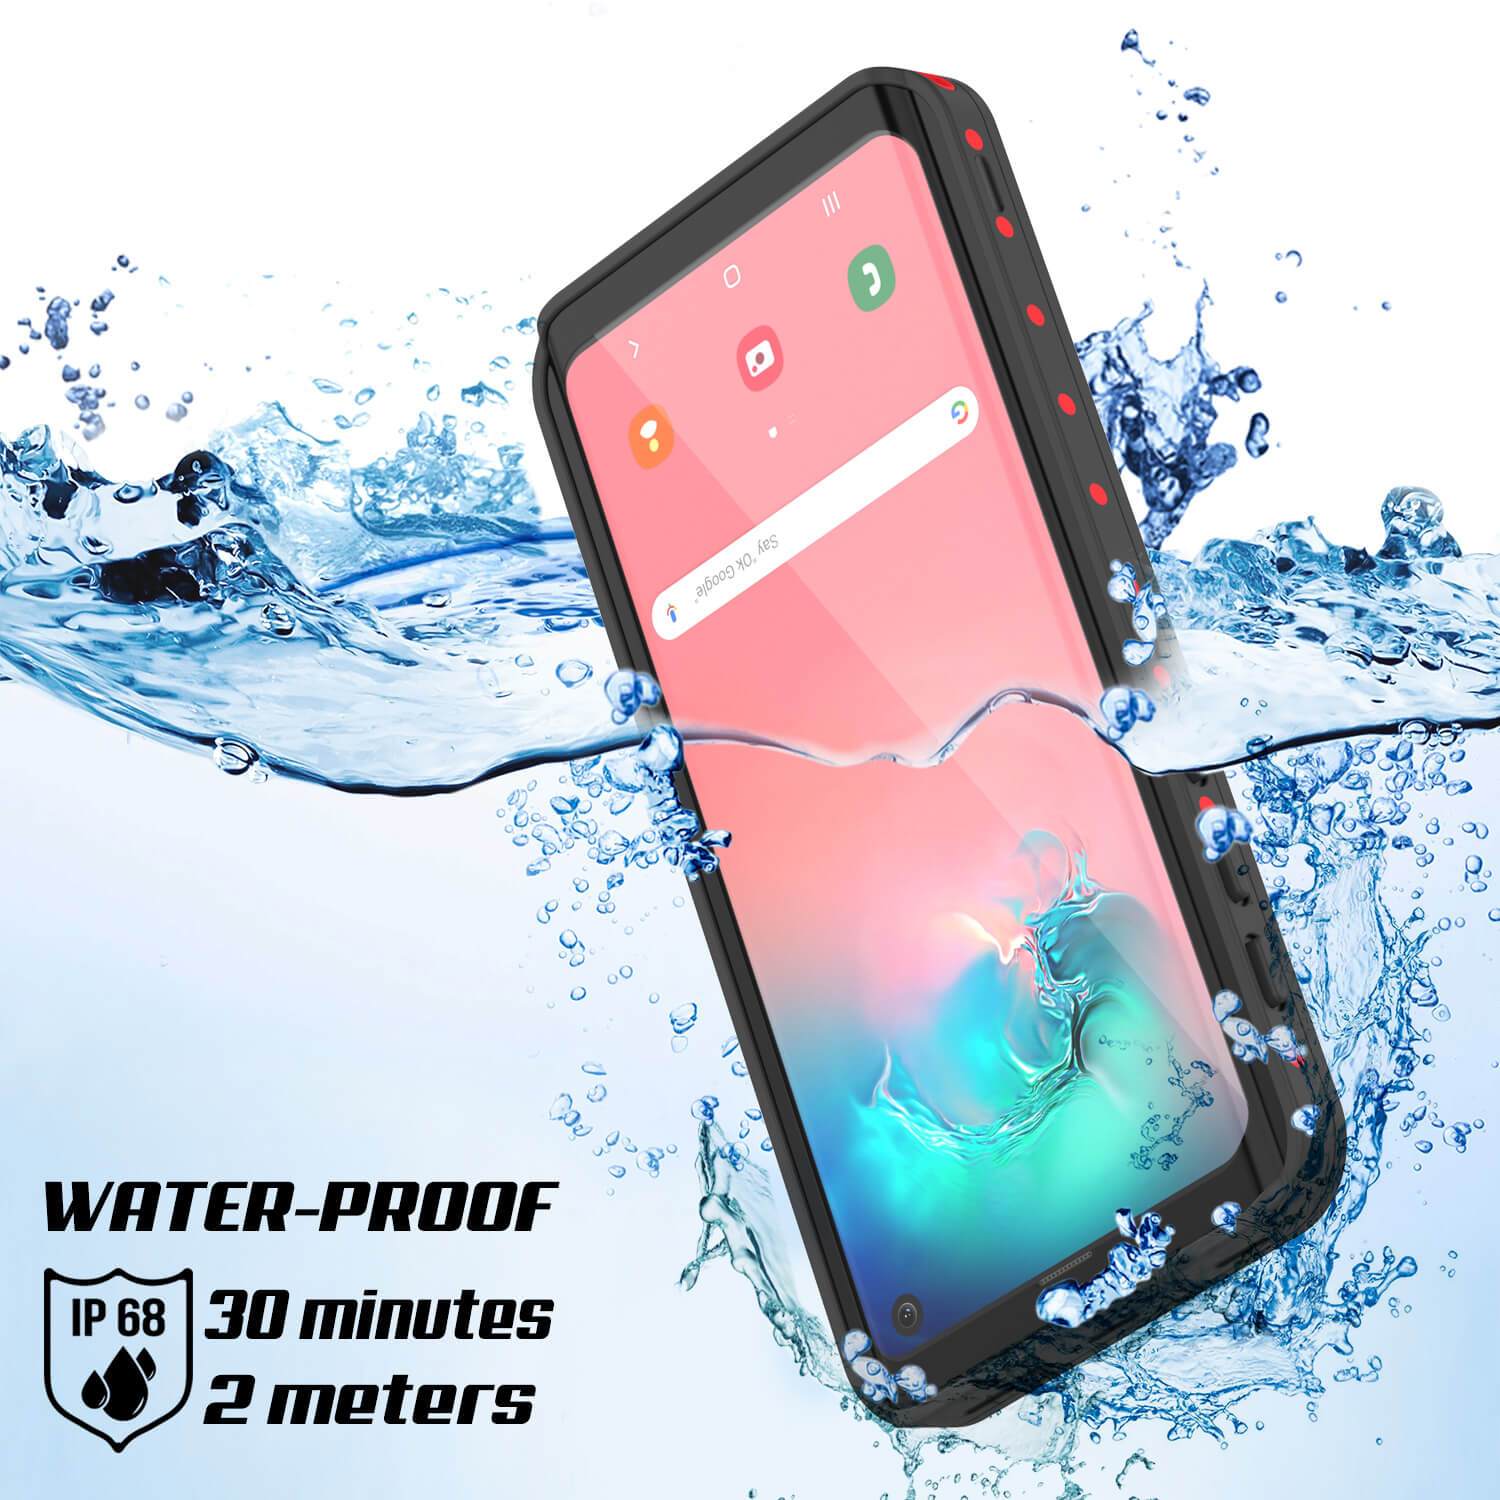 Galaxy S10 Waterproof Case PunkCase StudStar Red Thin 6.6ft Underwater IP68 Shock/Snow Proof